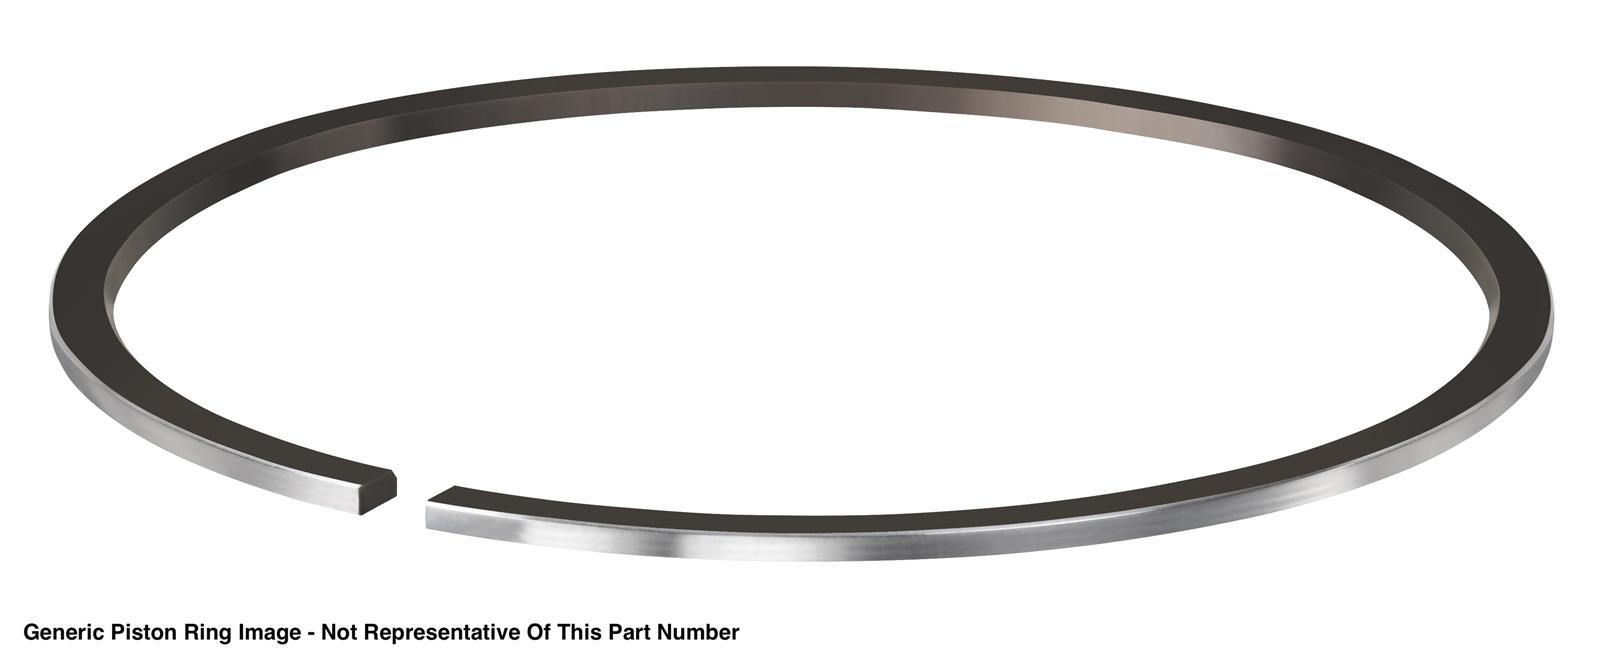 Piston Ring Types - Oil Control Rings